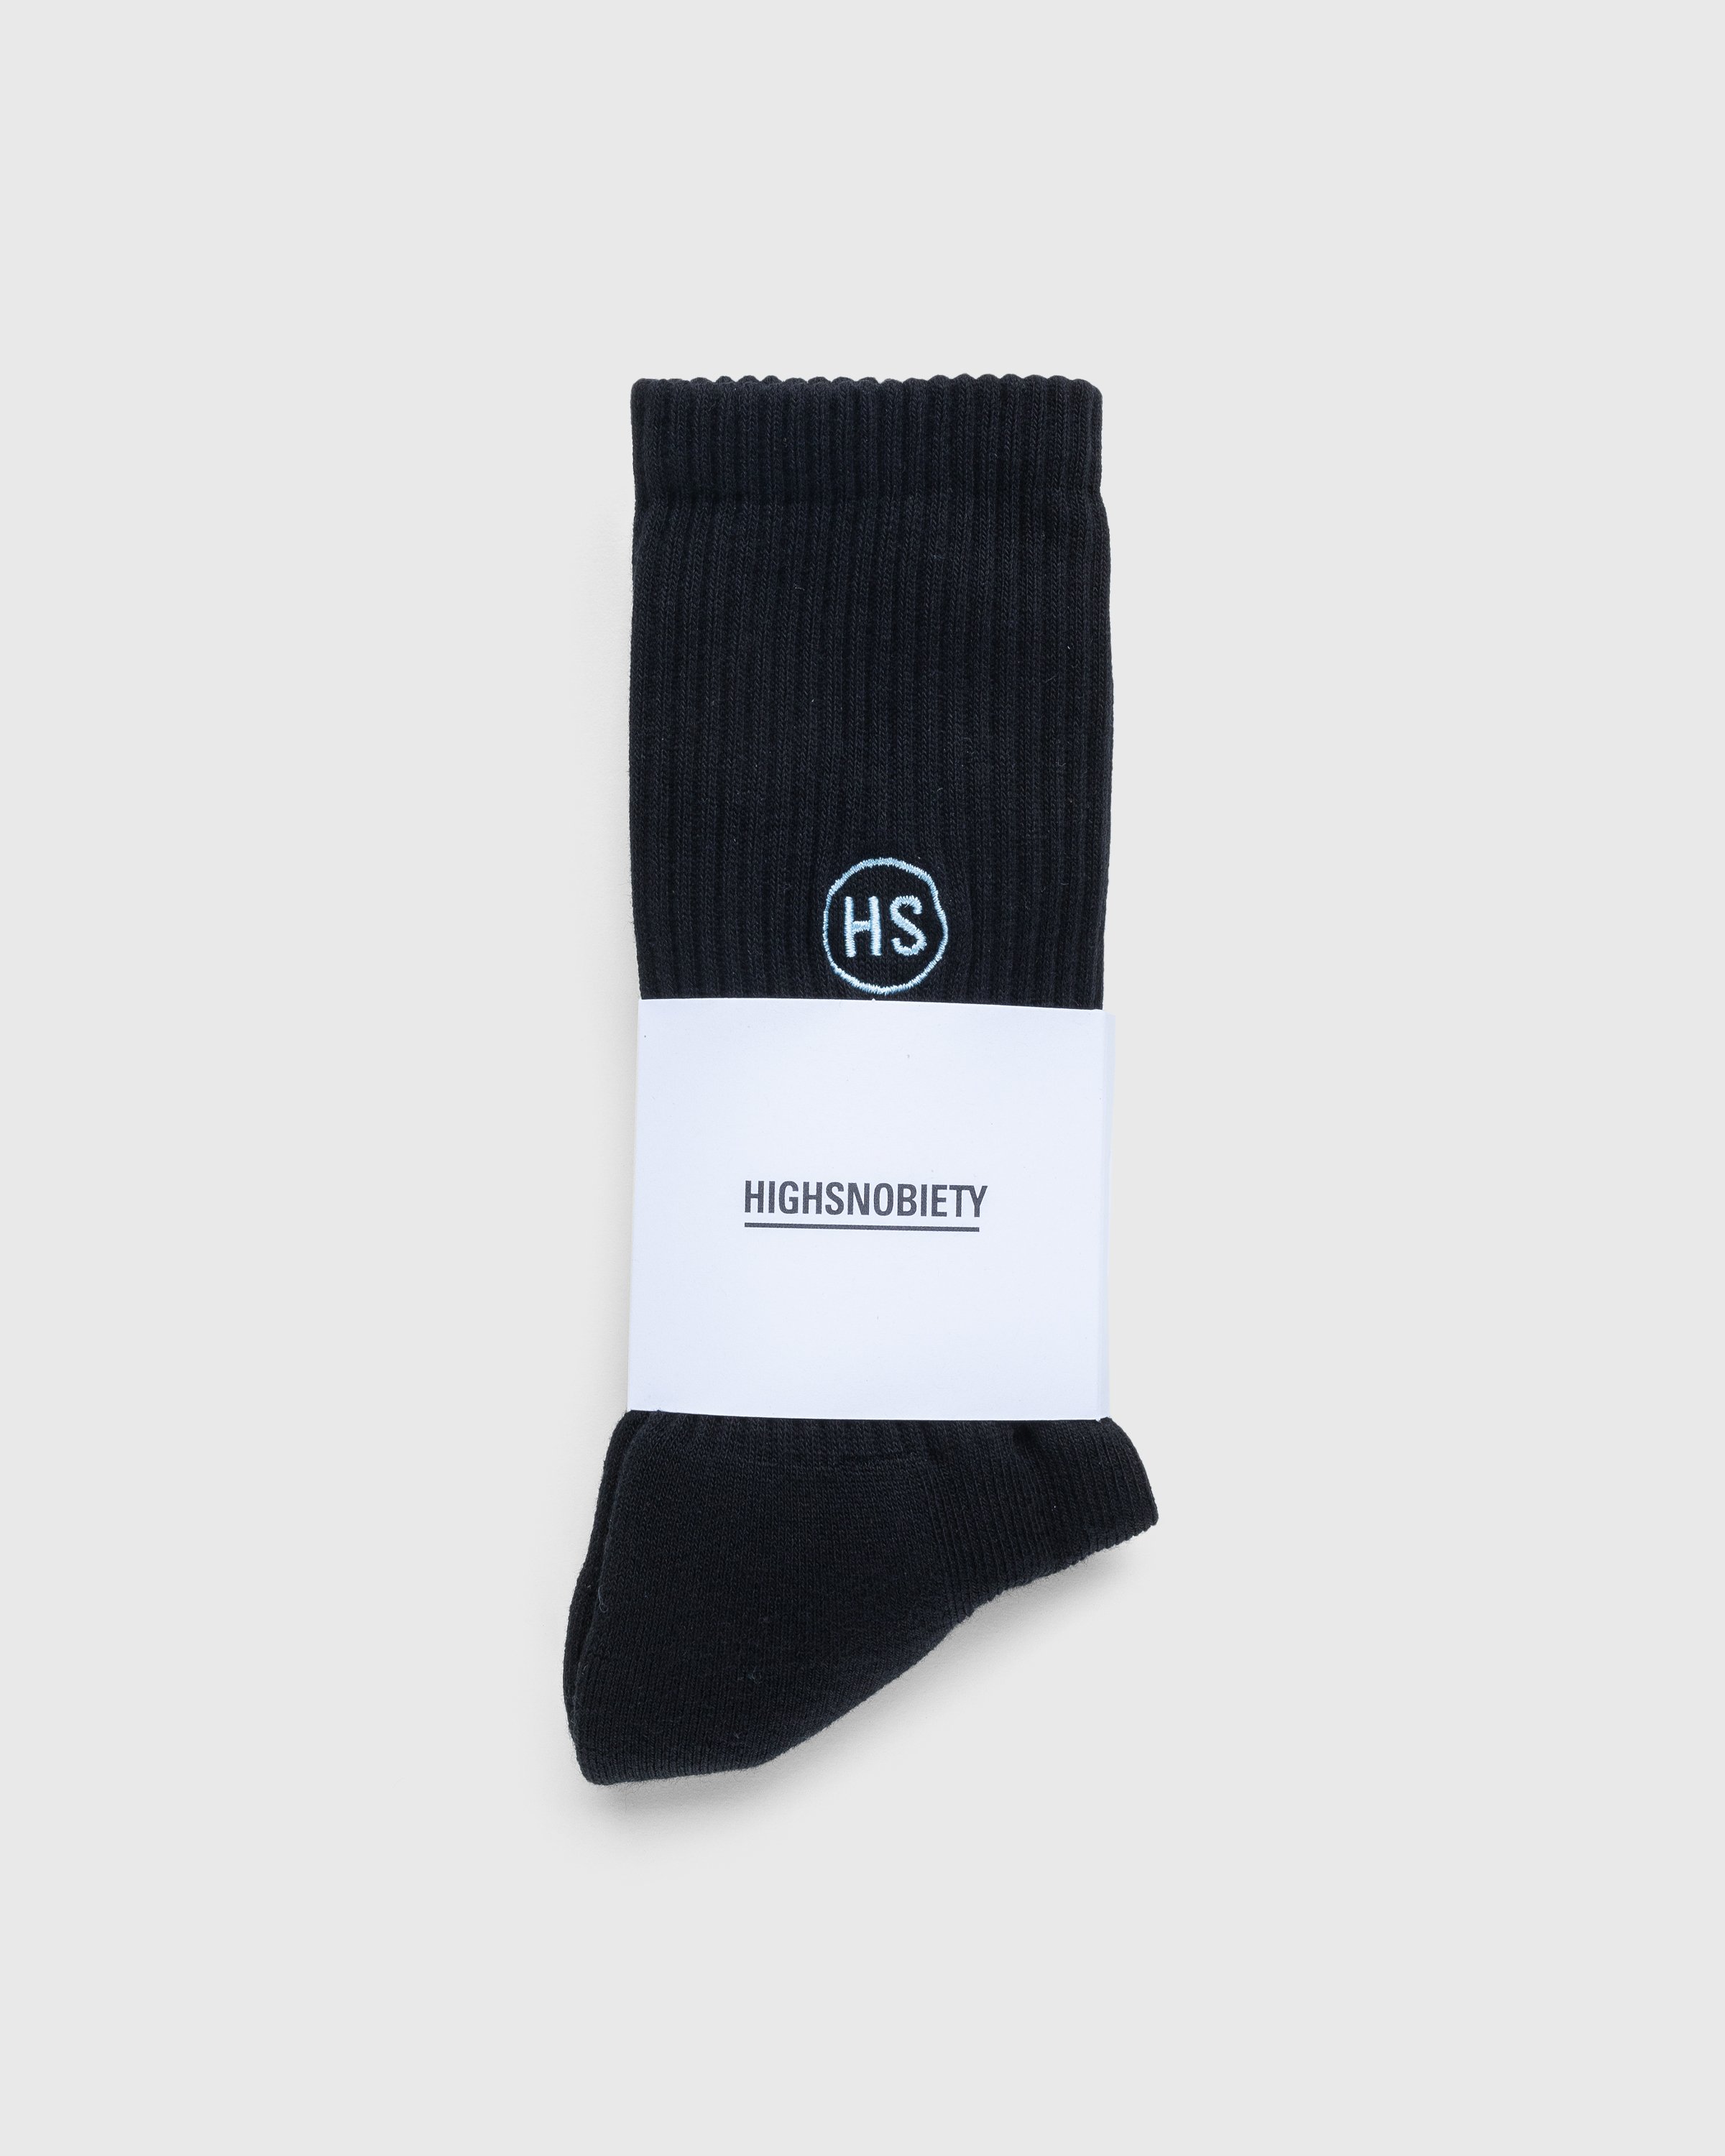 Highsnobiety - Logo Socks Black - Accessories - Black - Image 1